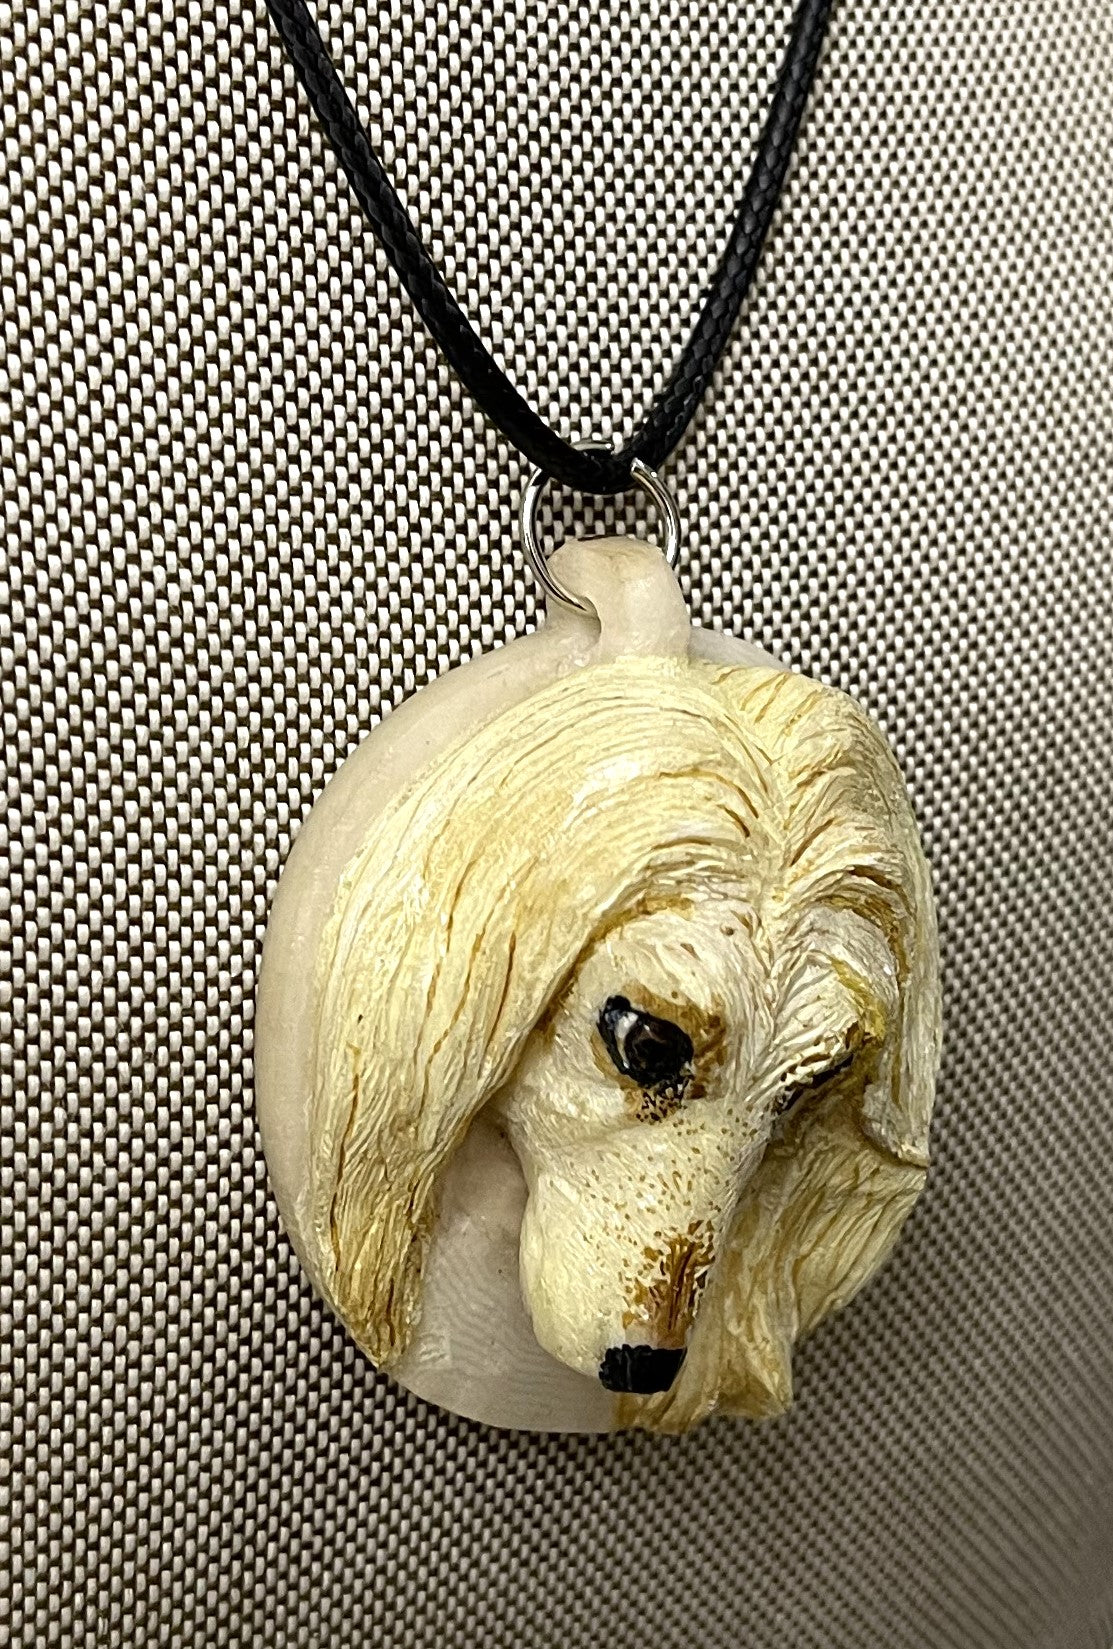 Dog Carved Necklace Pendant Panama